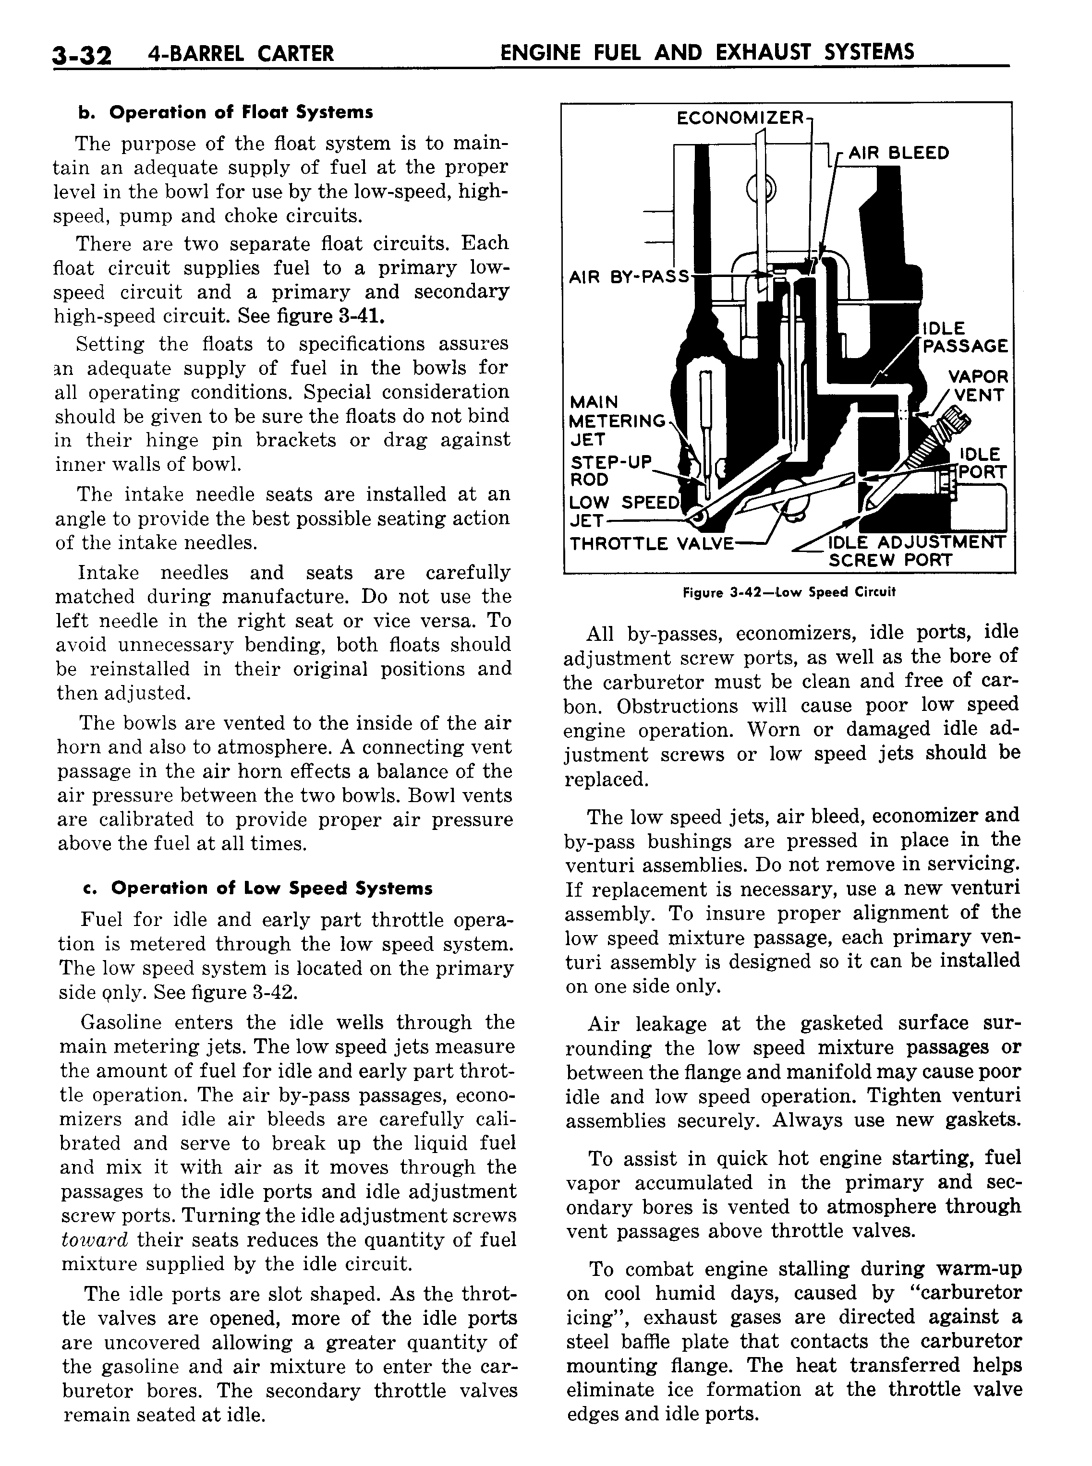 n_04 1957 Buick Shop Manual - Engine Fuel & Exhaust-032-032.jpg